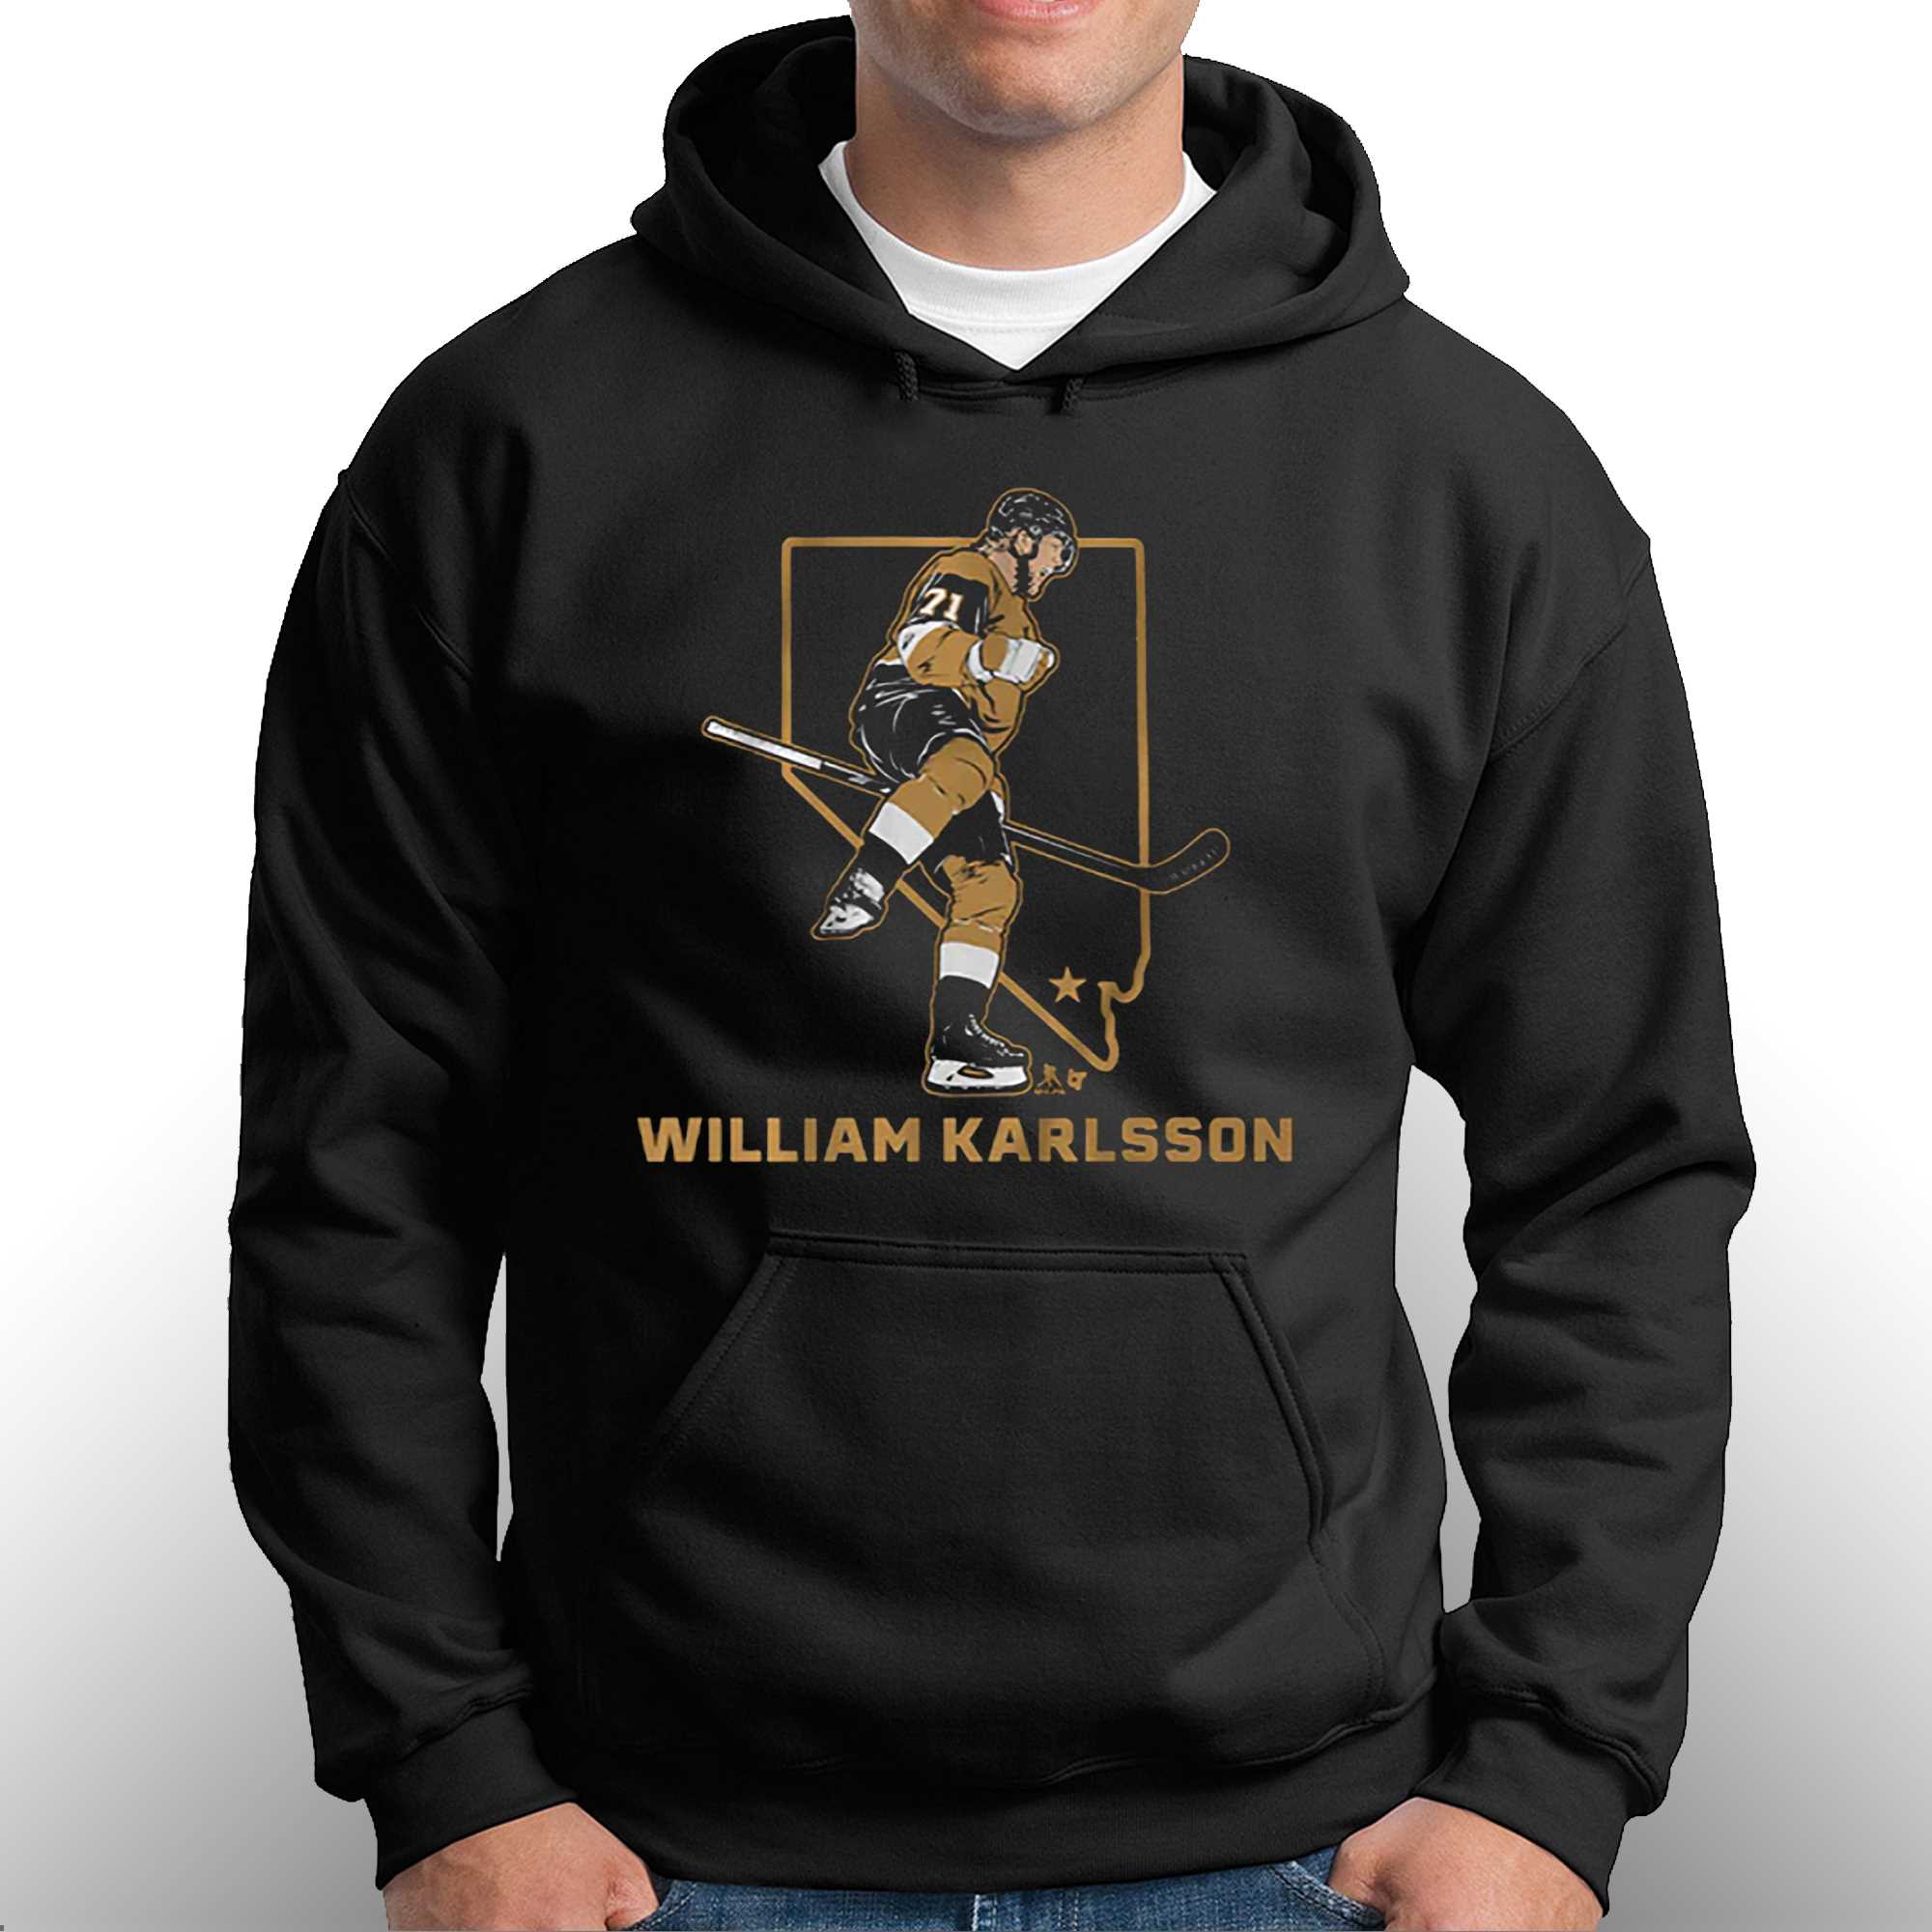 William Karlsson Jerseys, Apparel, Clothing